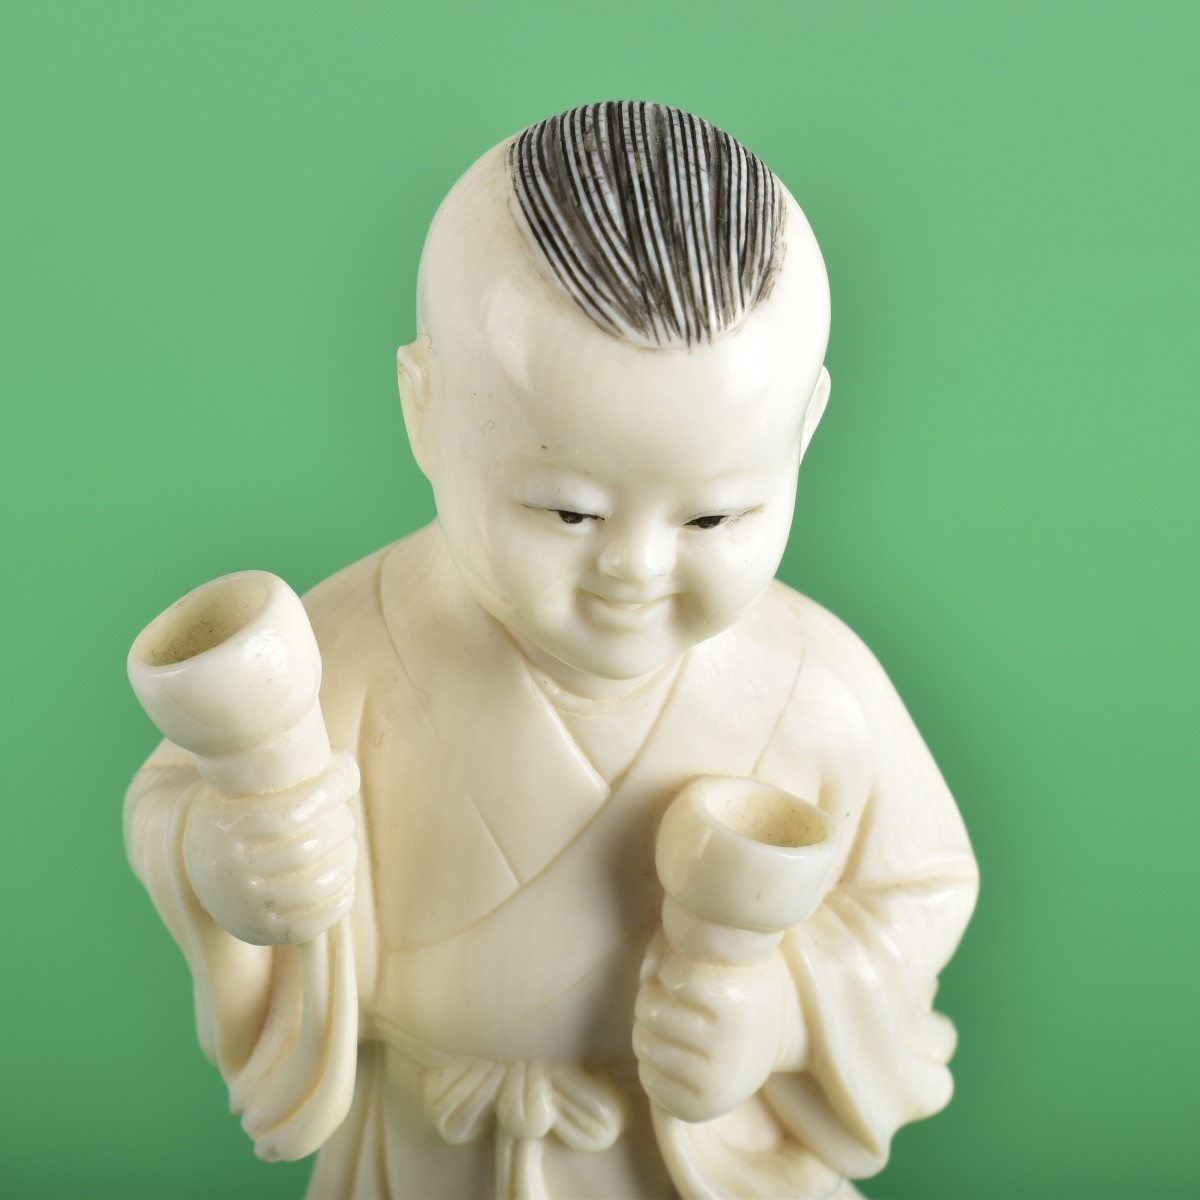 Antique Chinese Polychrome Figurine